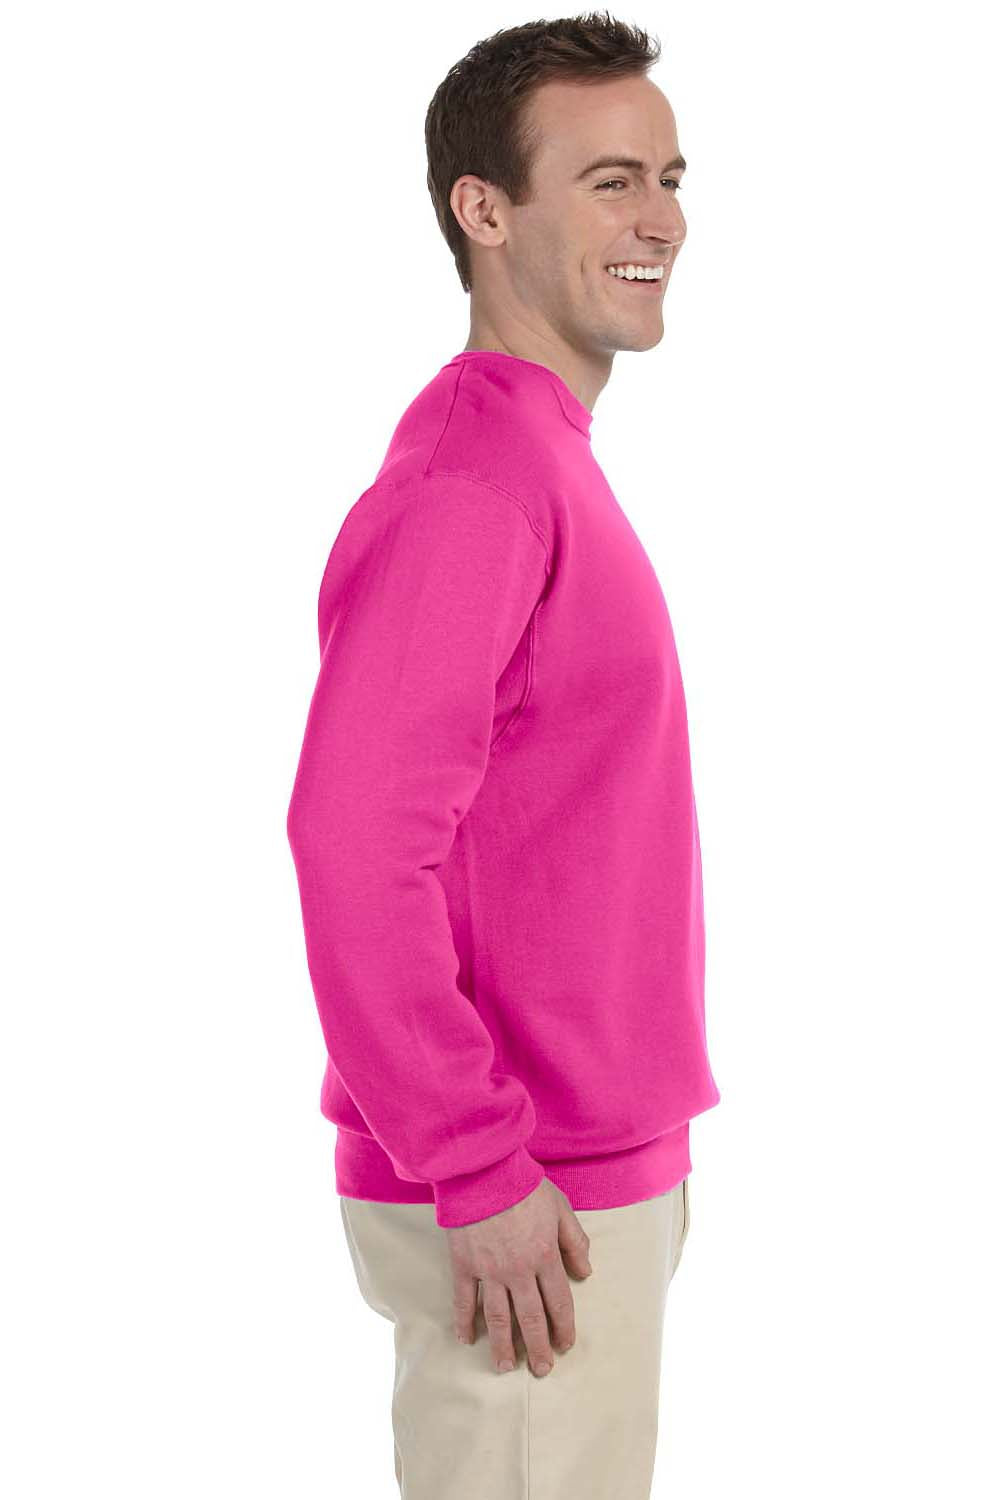 Jerzees 562 Mens NuBlend Fleece Crewneck Sweatshirt Cyber Pink Side